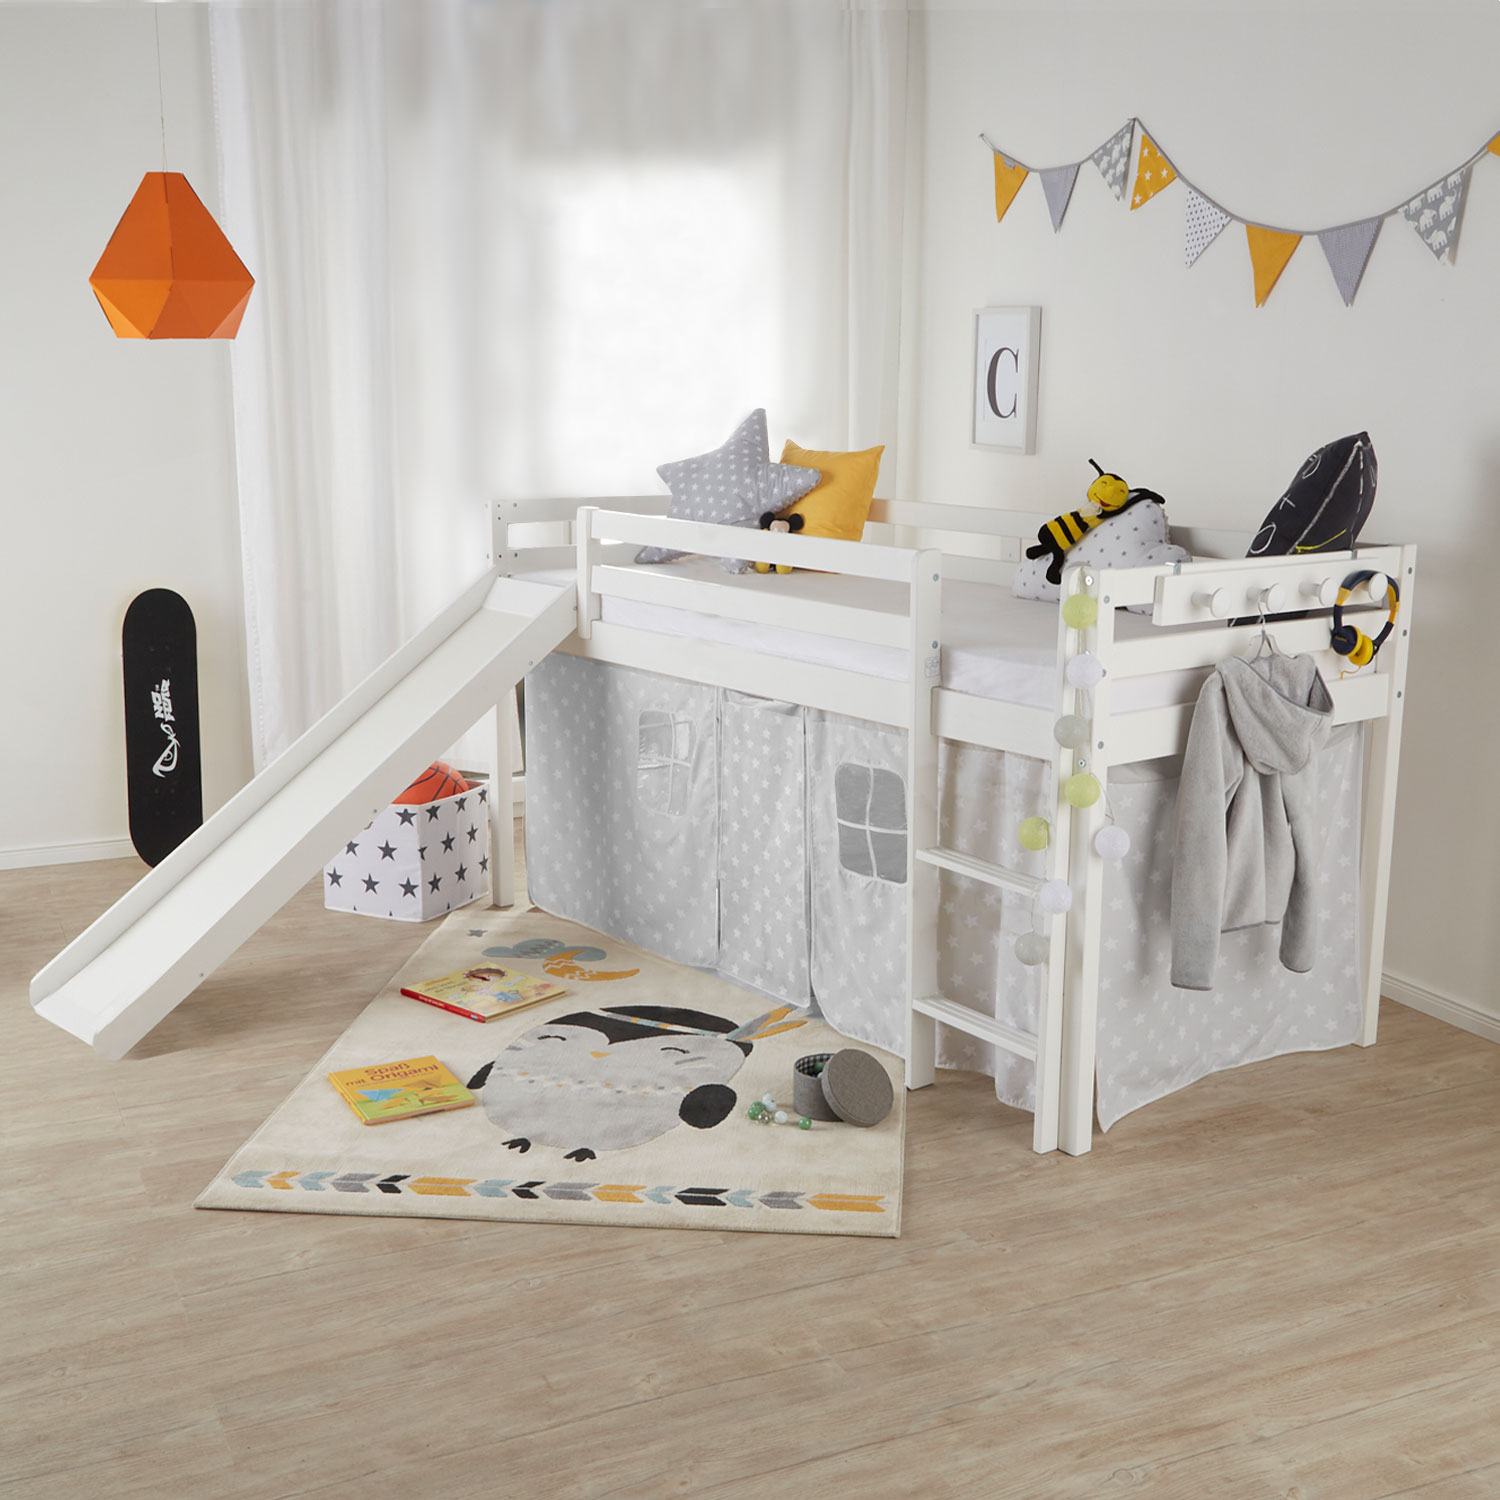 Children's Loft Bed 90x200 cm with Slatted Frame Slide Ladder, Bunk Bed Play Bed White Wood Pine